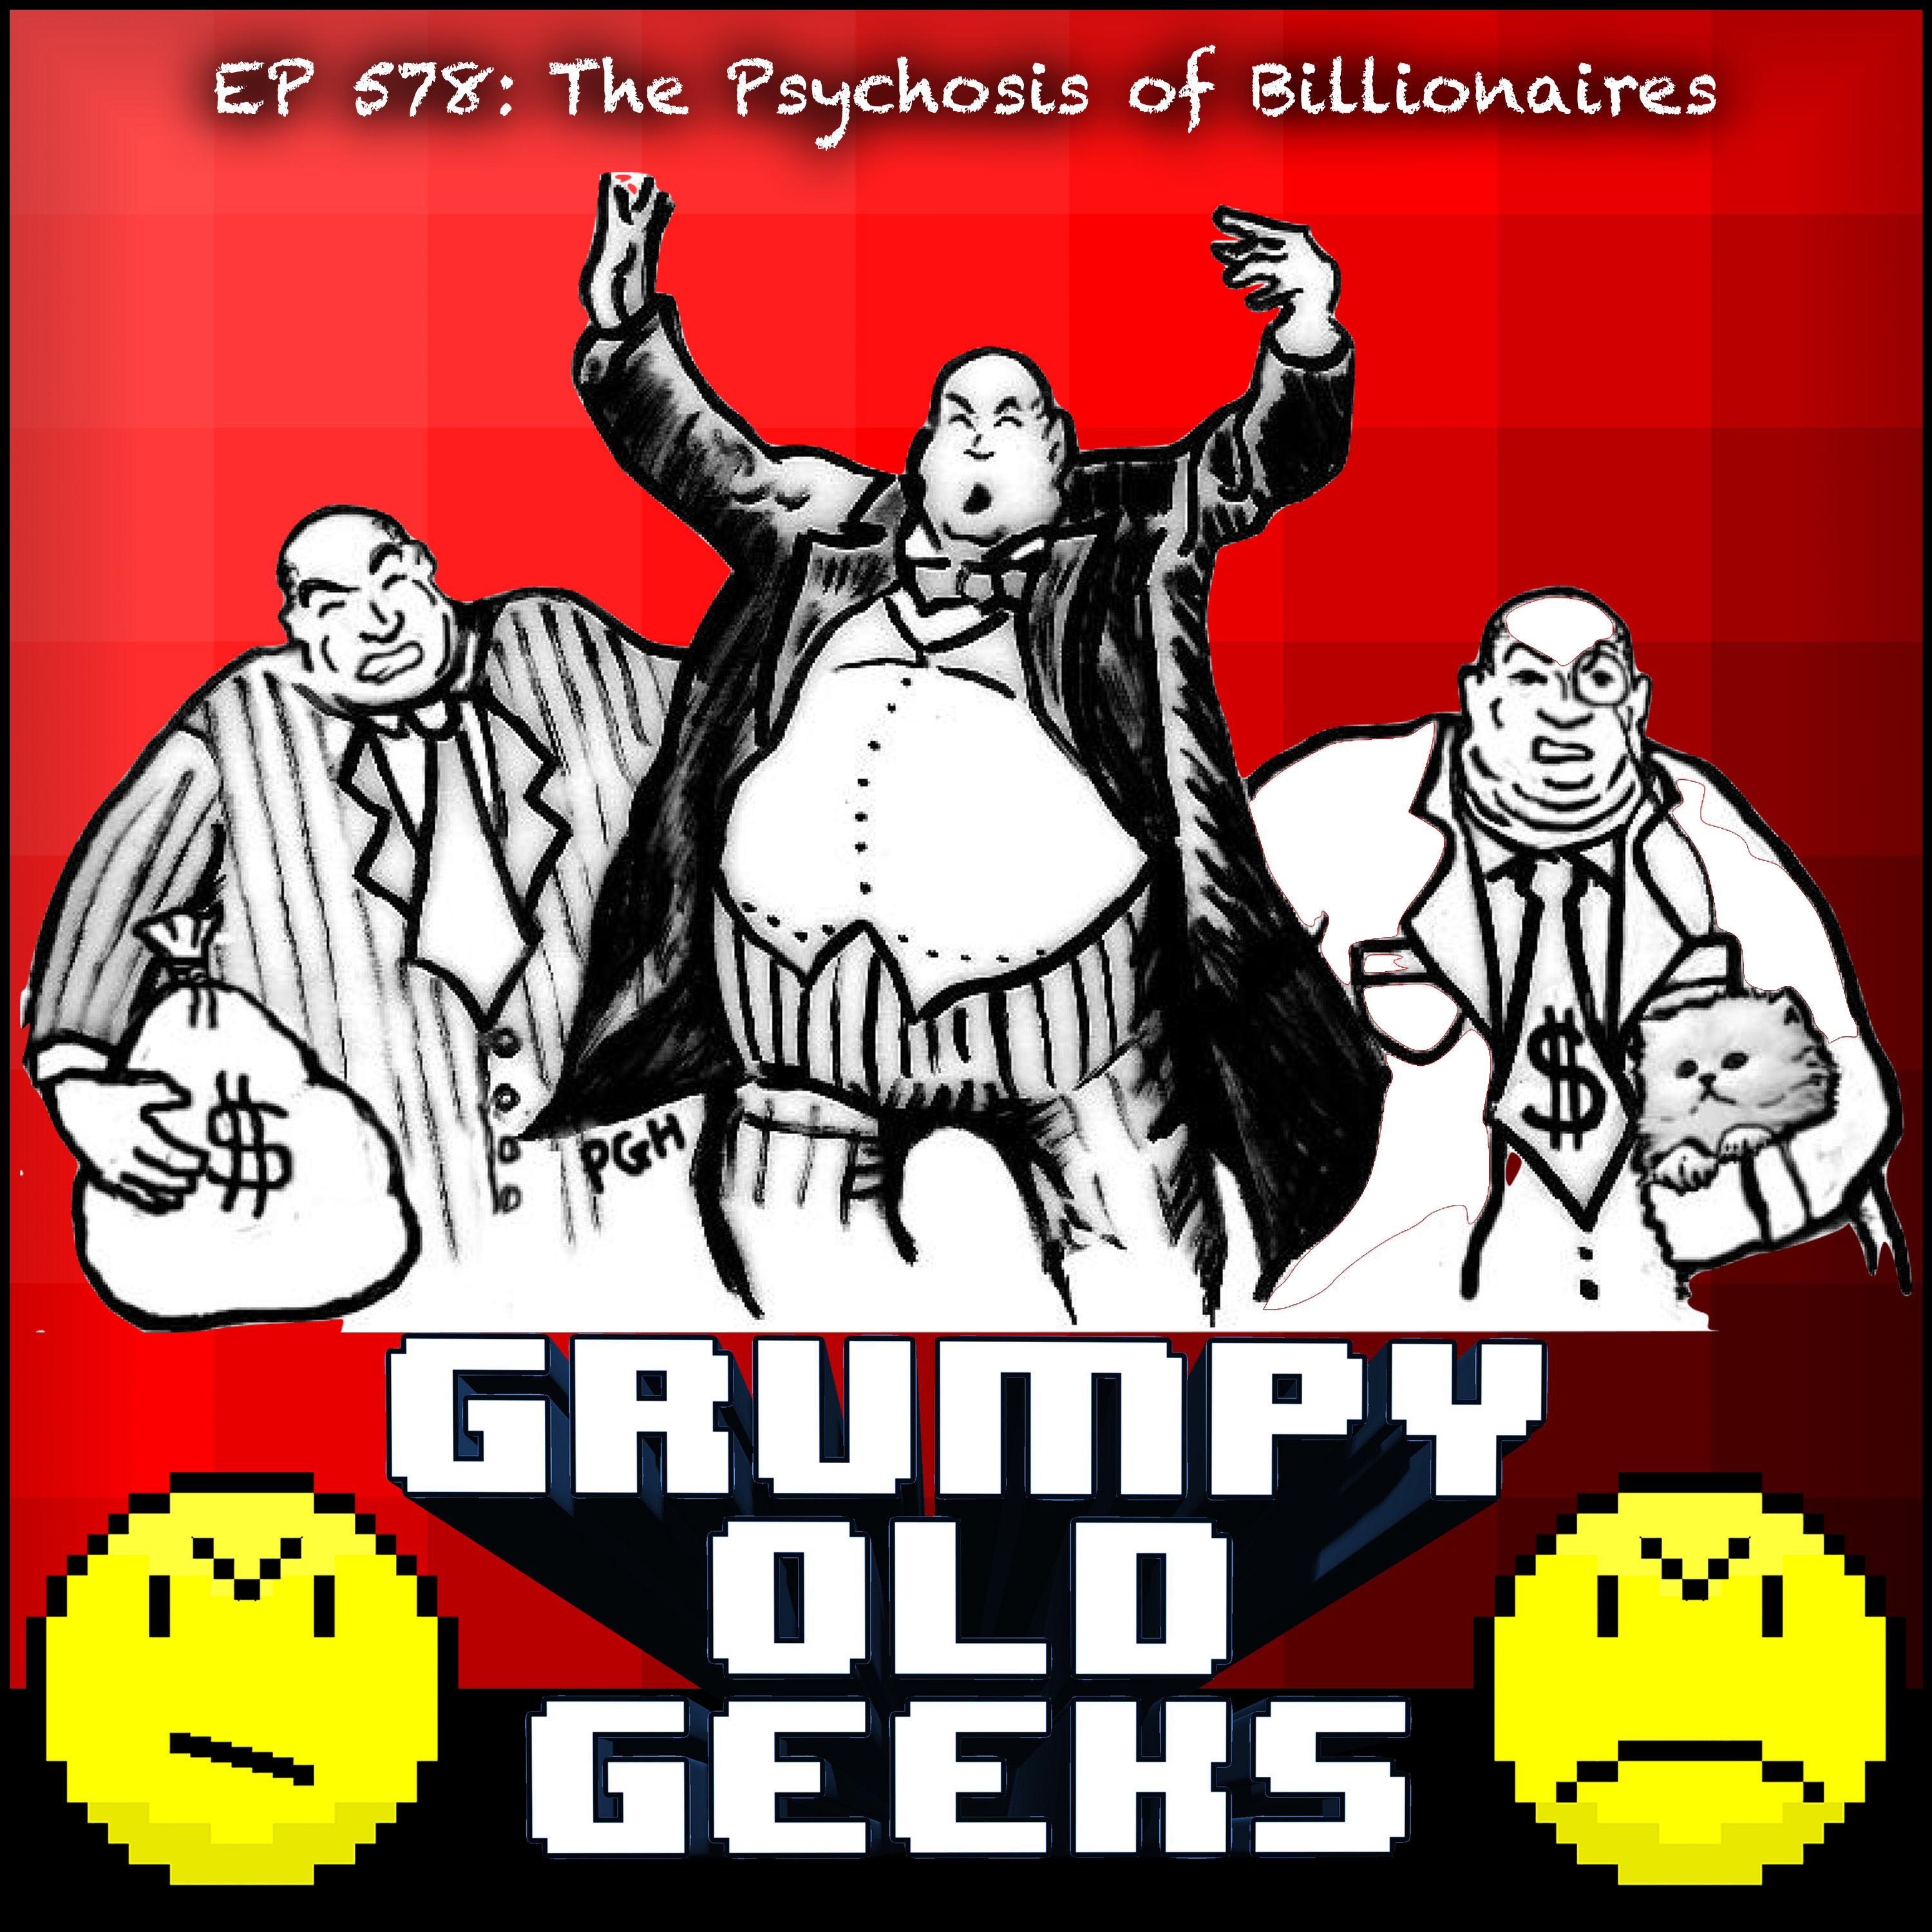 578: The Psychosis of Billionaires